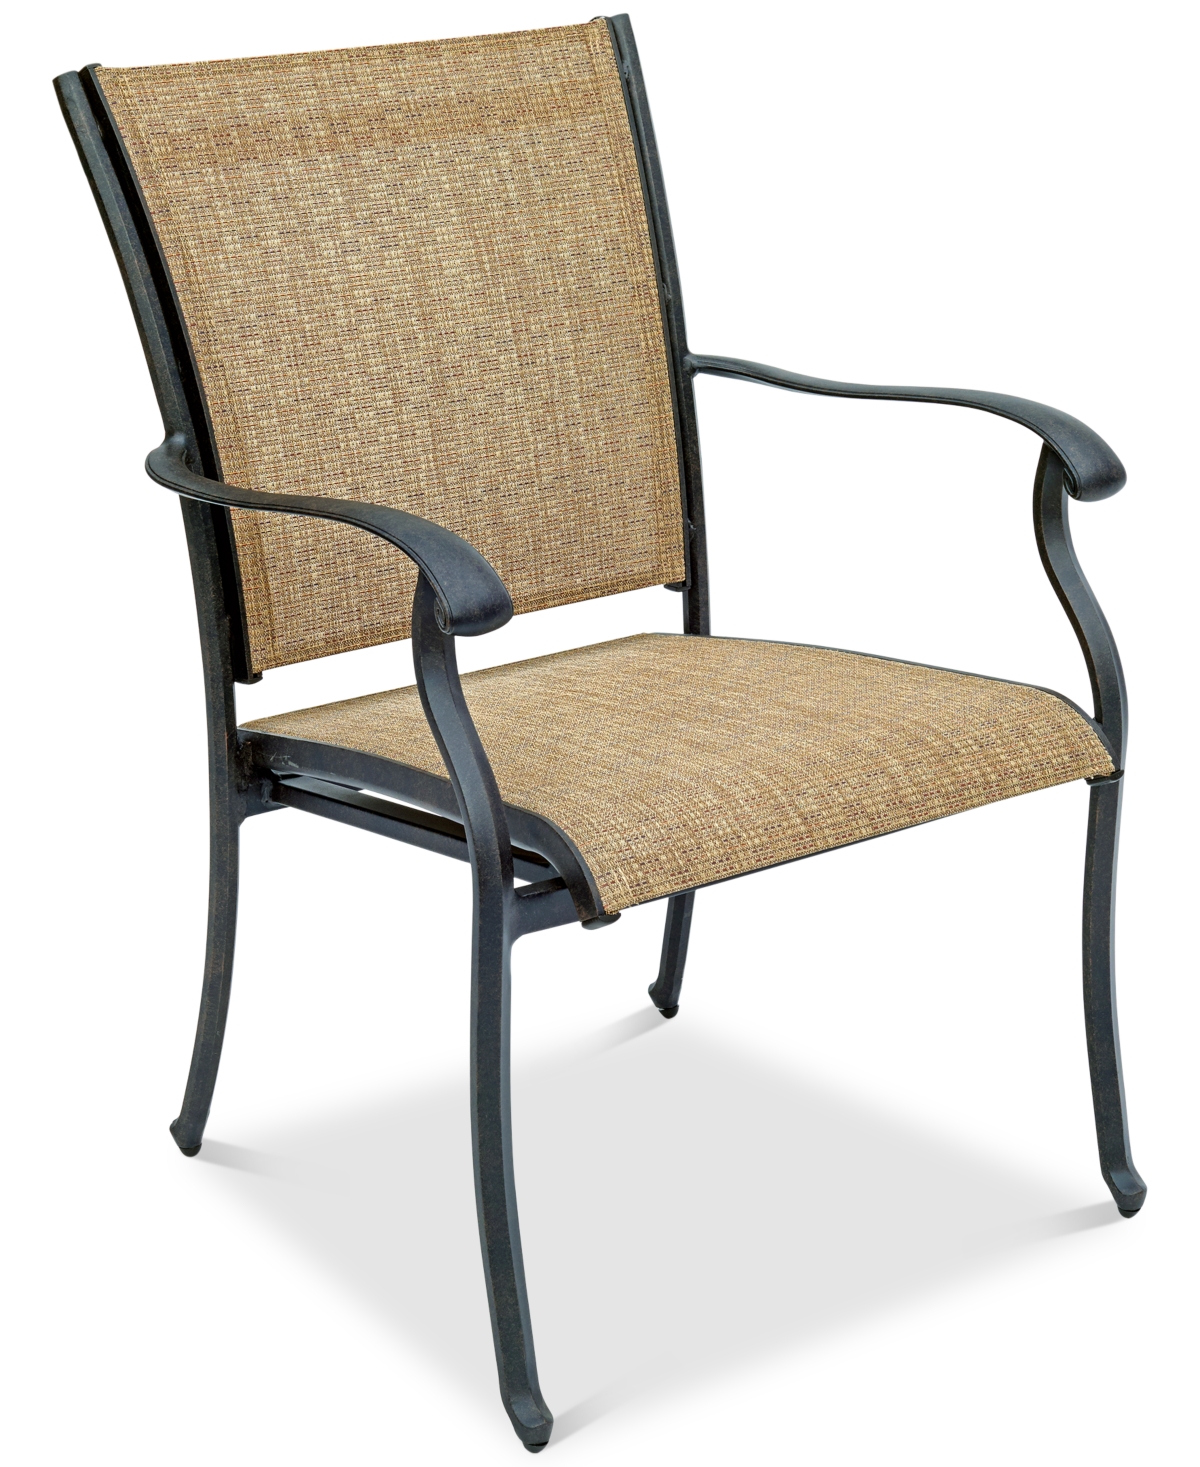 Beachmont Ii Outdoor Dining Chair, Created for Macys